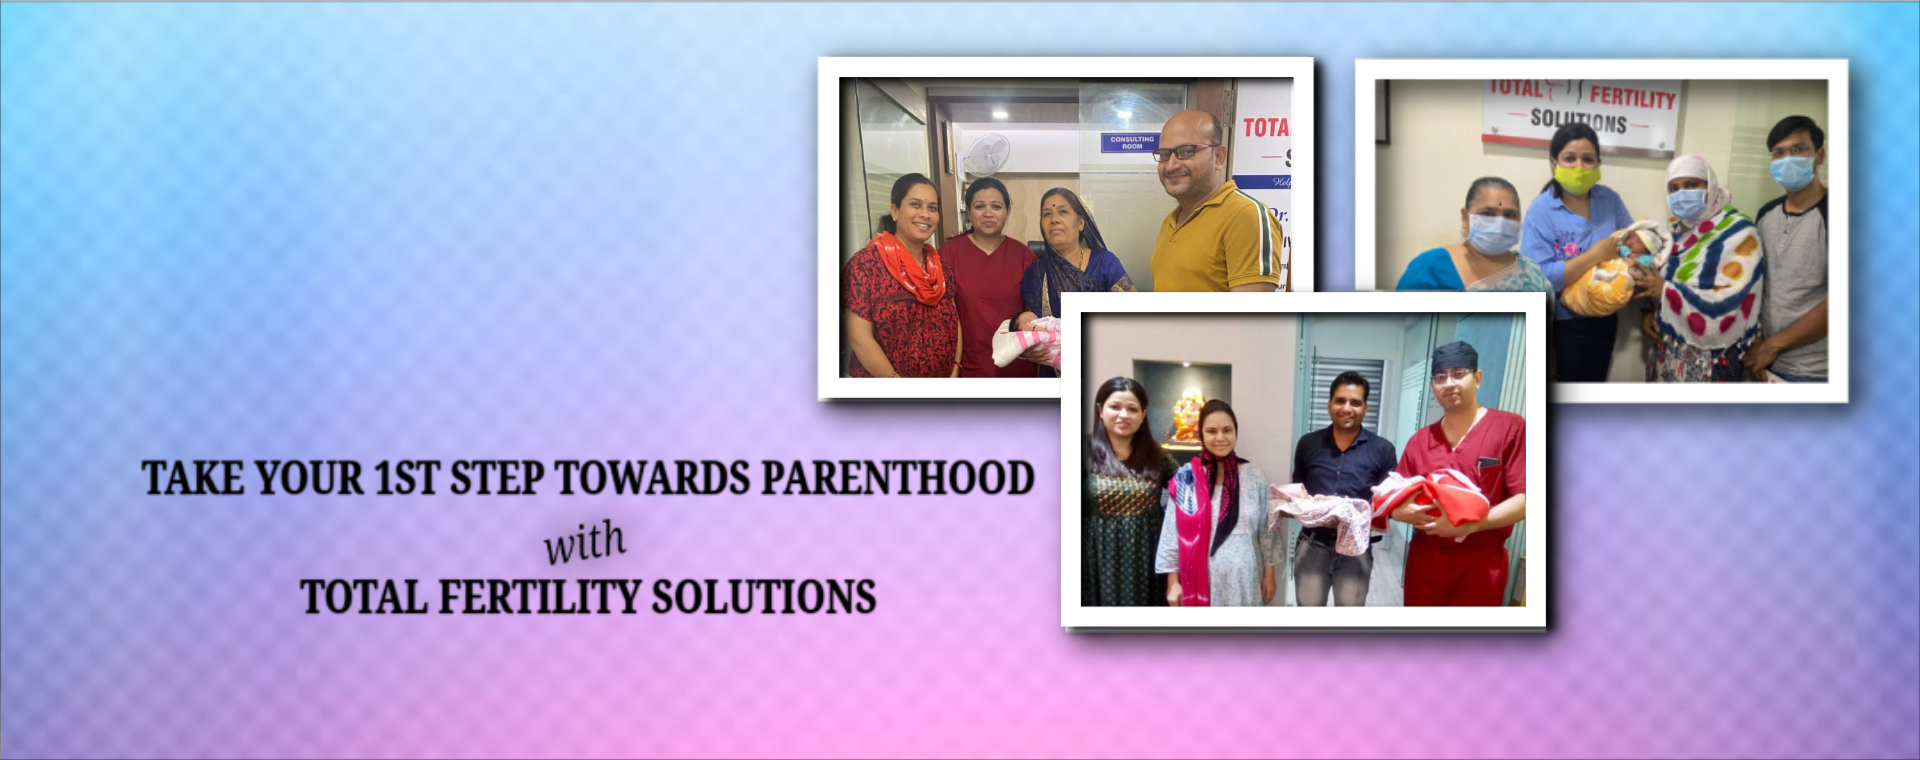 Total fertility Solution banner